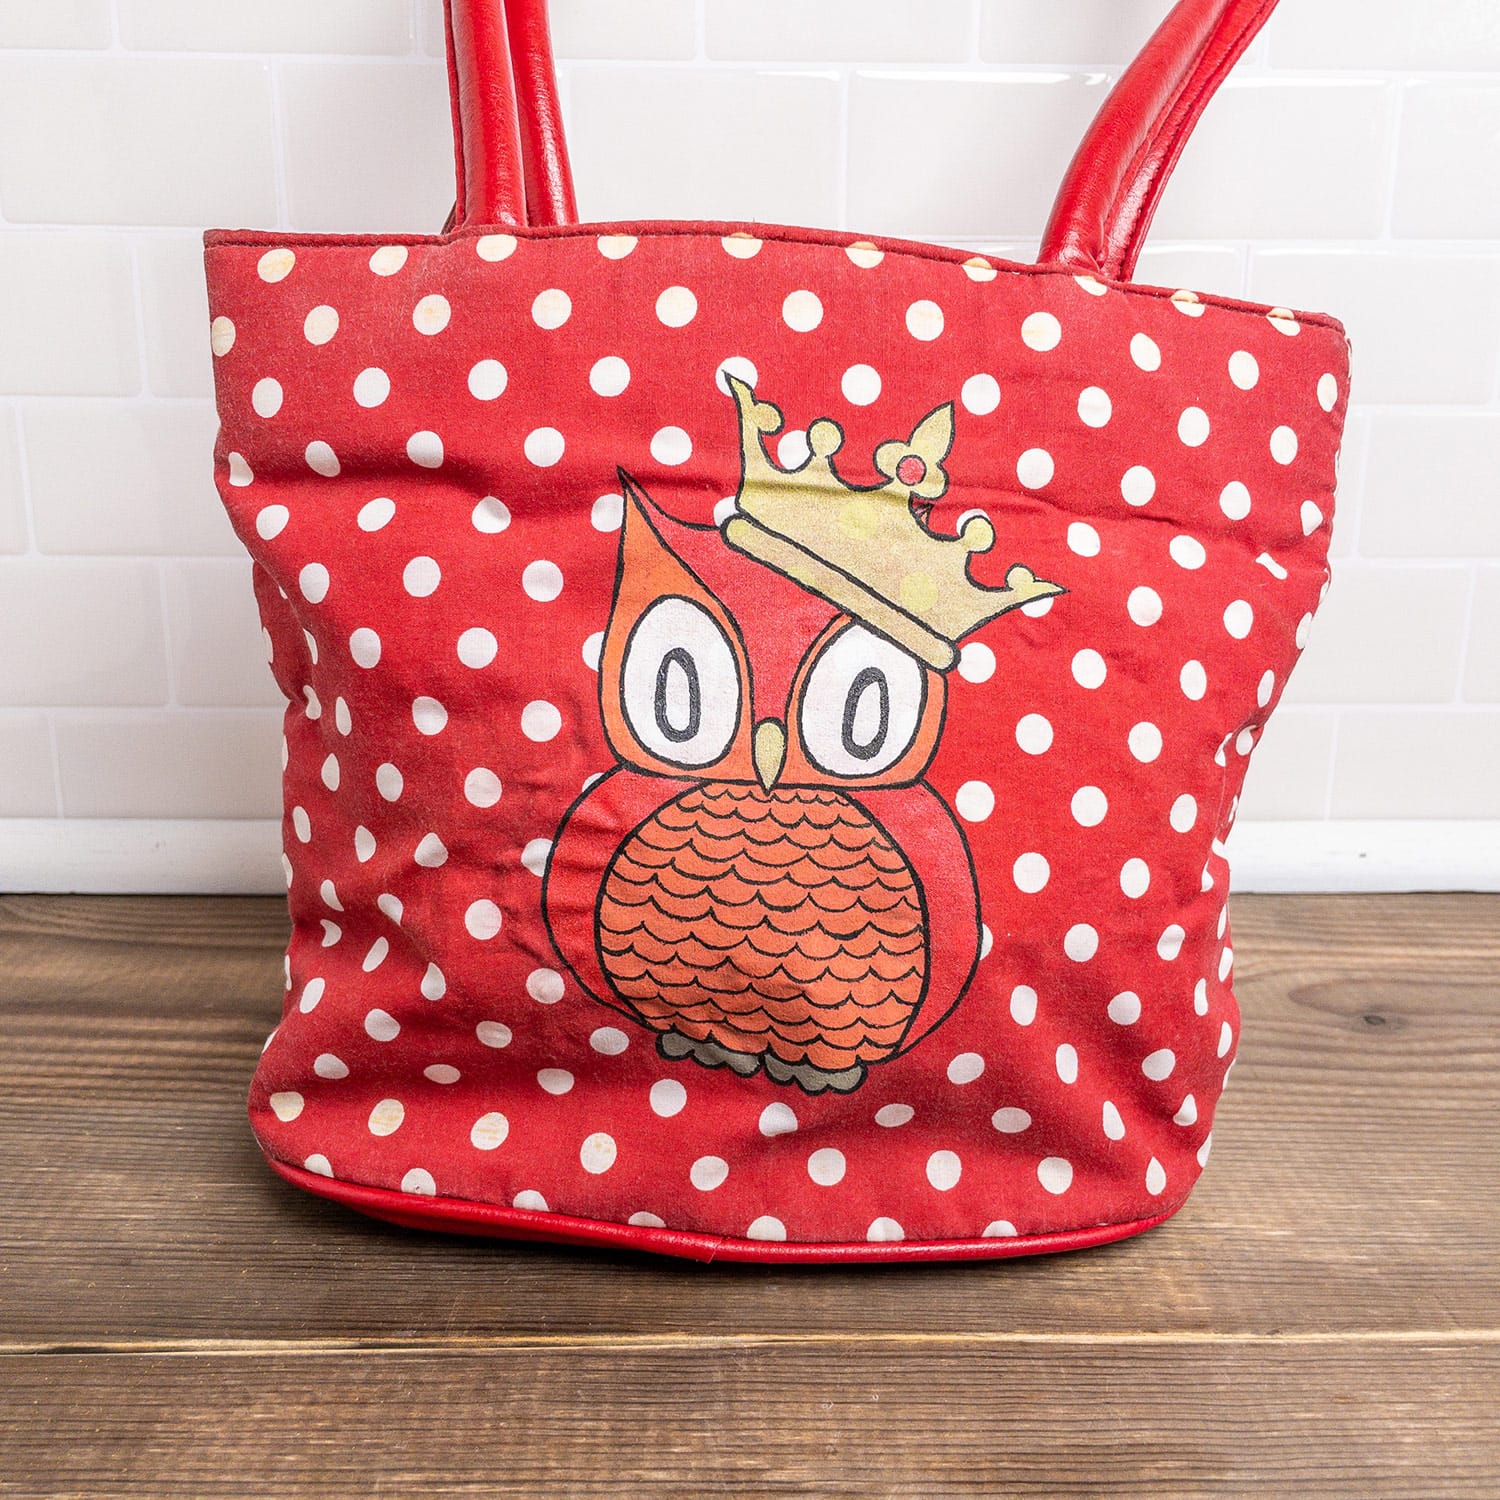 Buy Owl Tote Bag Online In India - Etsy India